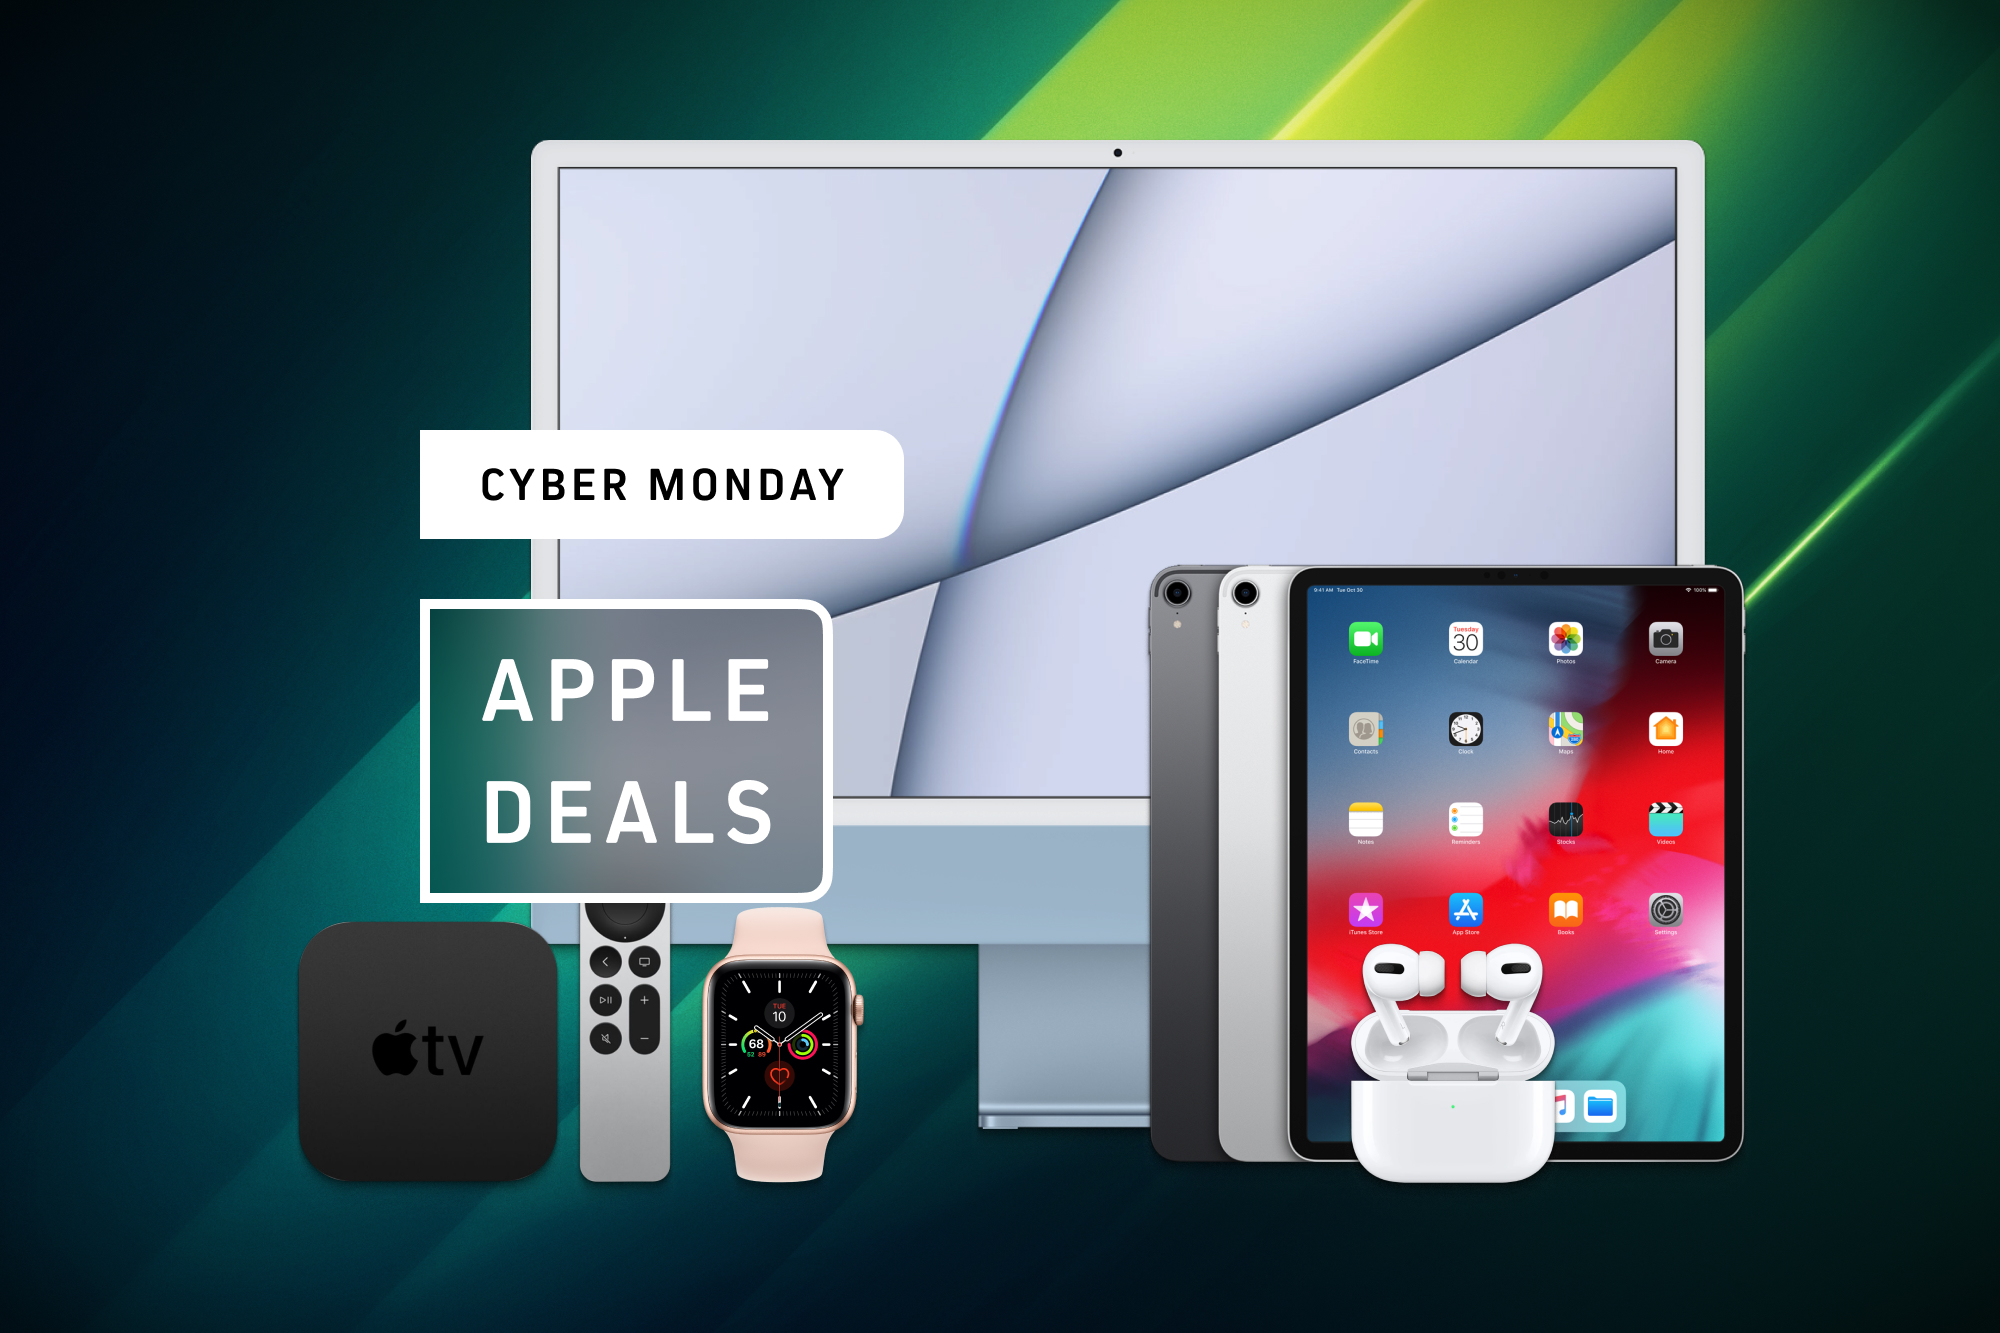 apple-cyber-monday-deals-apple-watch-airpods-ipad-macbook-digital